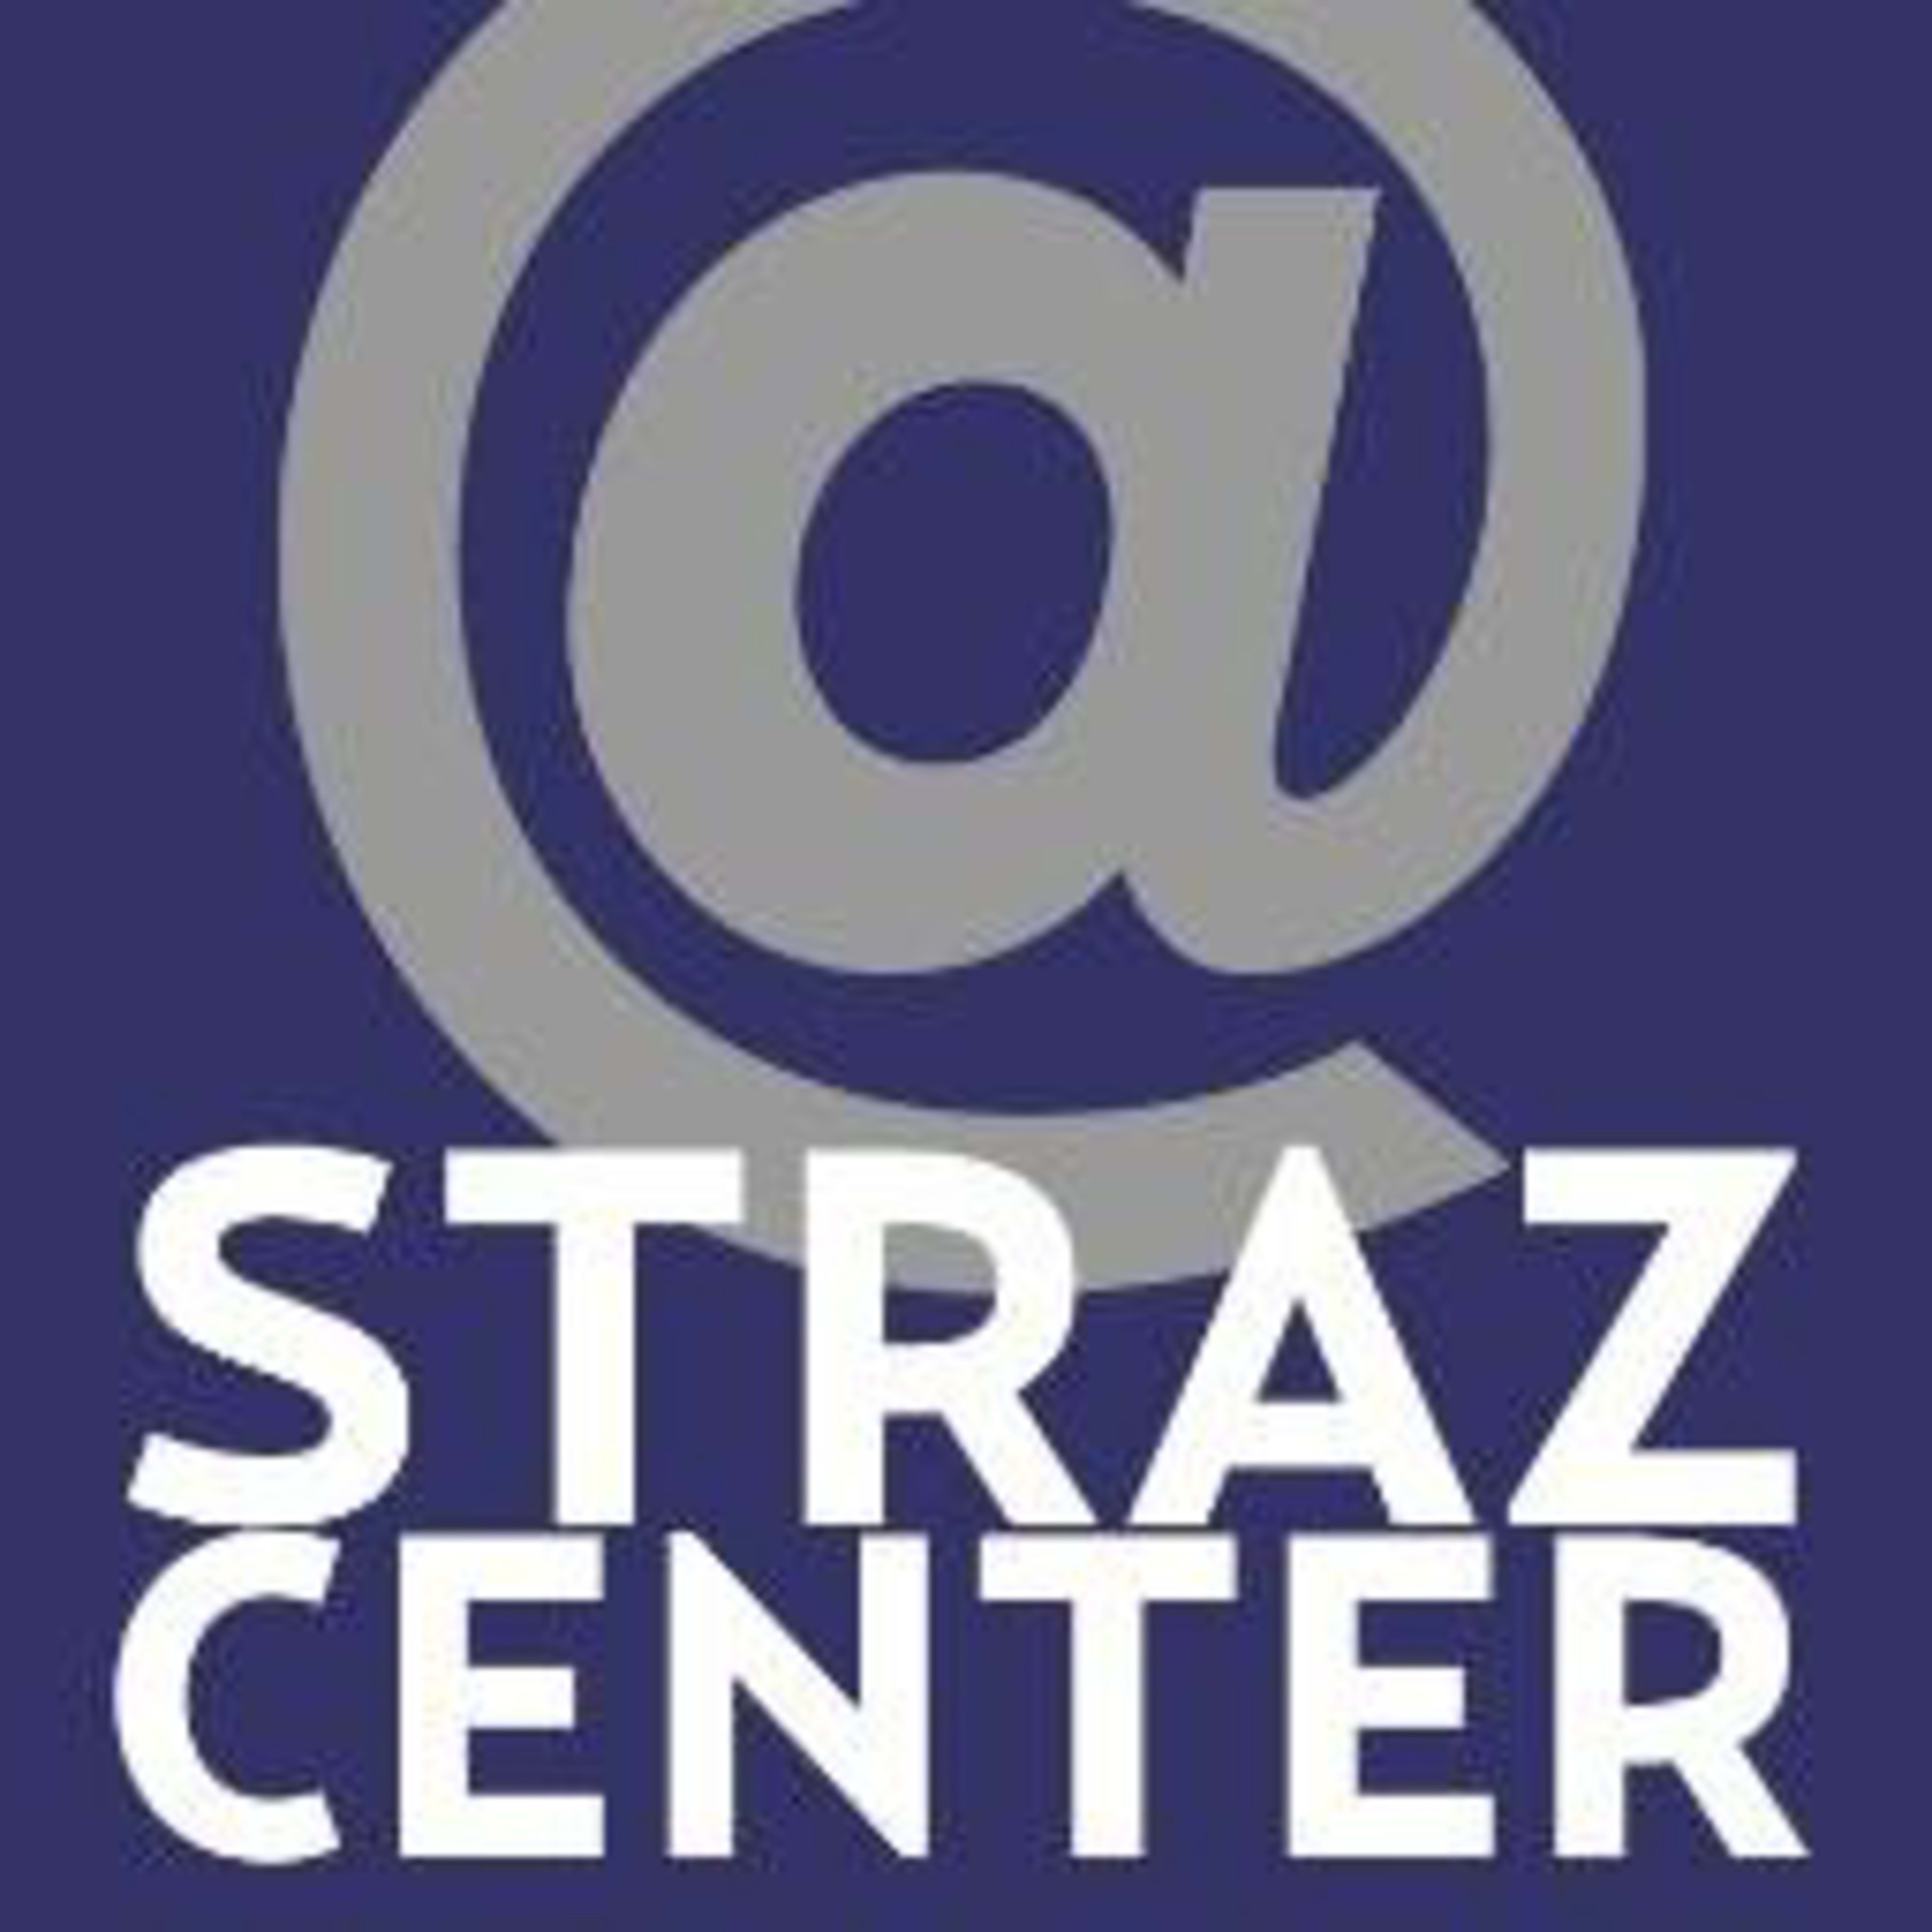 Straz CenterCode